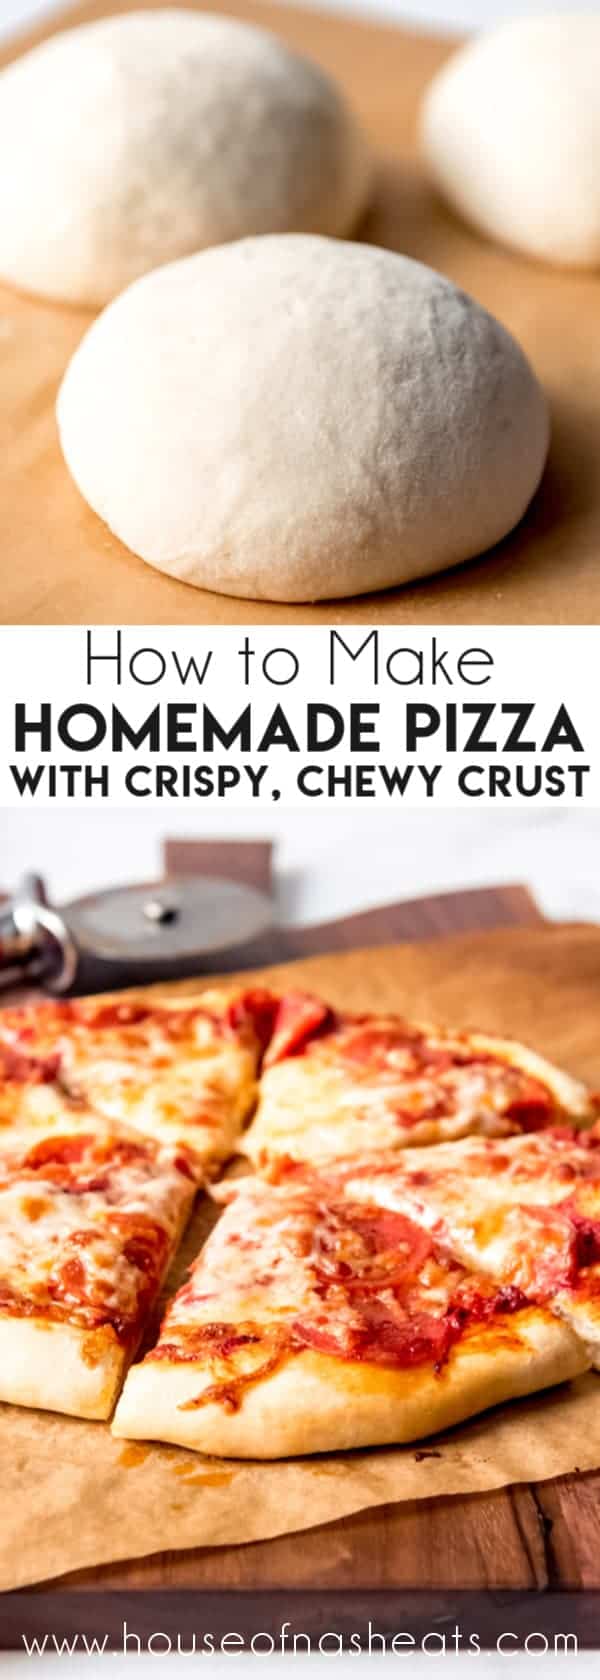 Homemade Pizza Crust